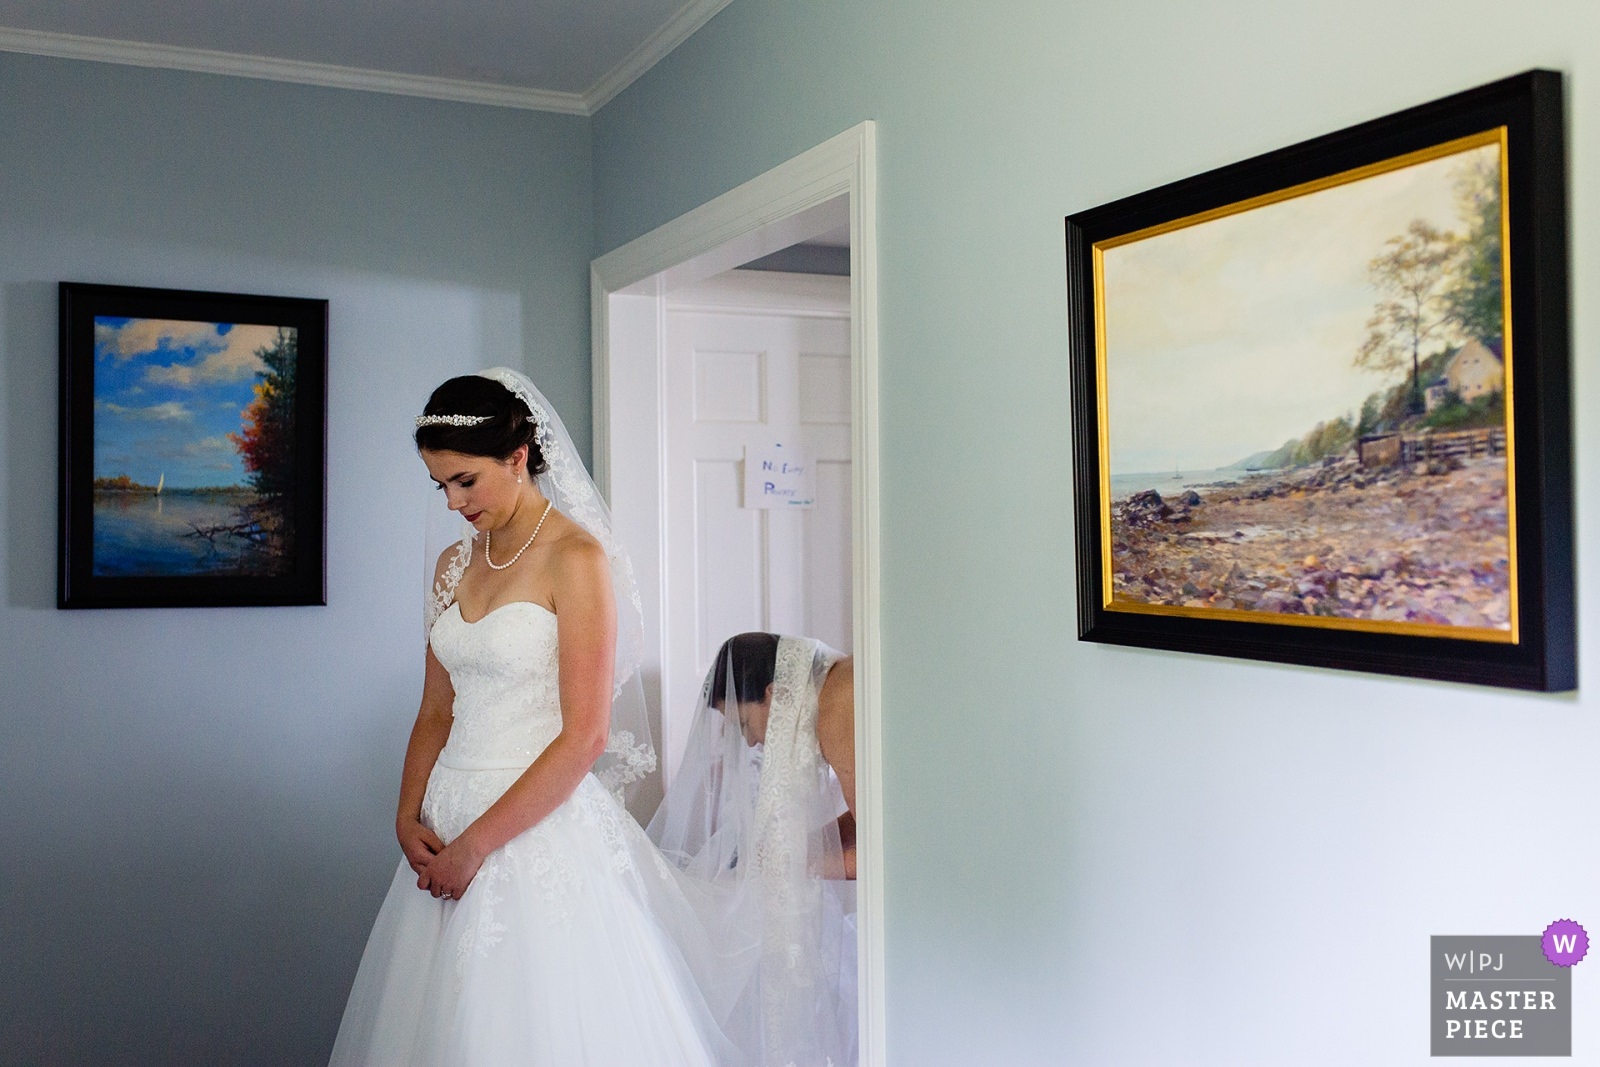 Creative Maine documentary wedding photographers in Maine